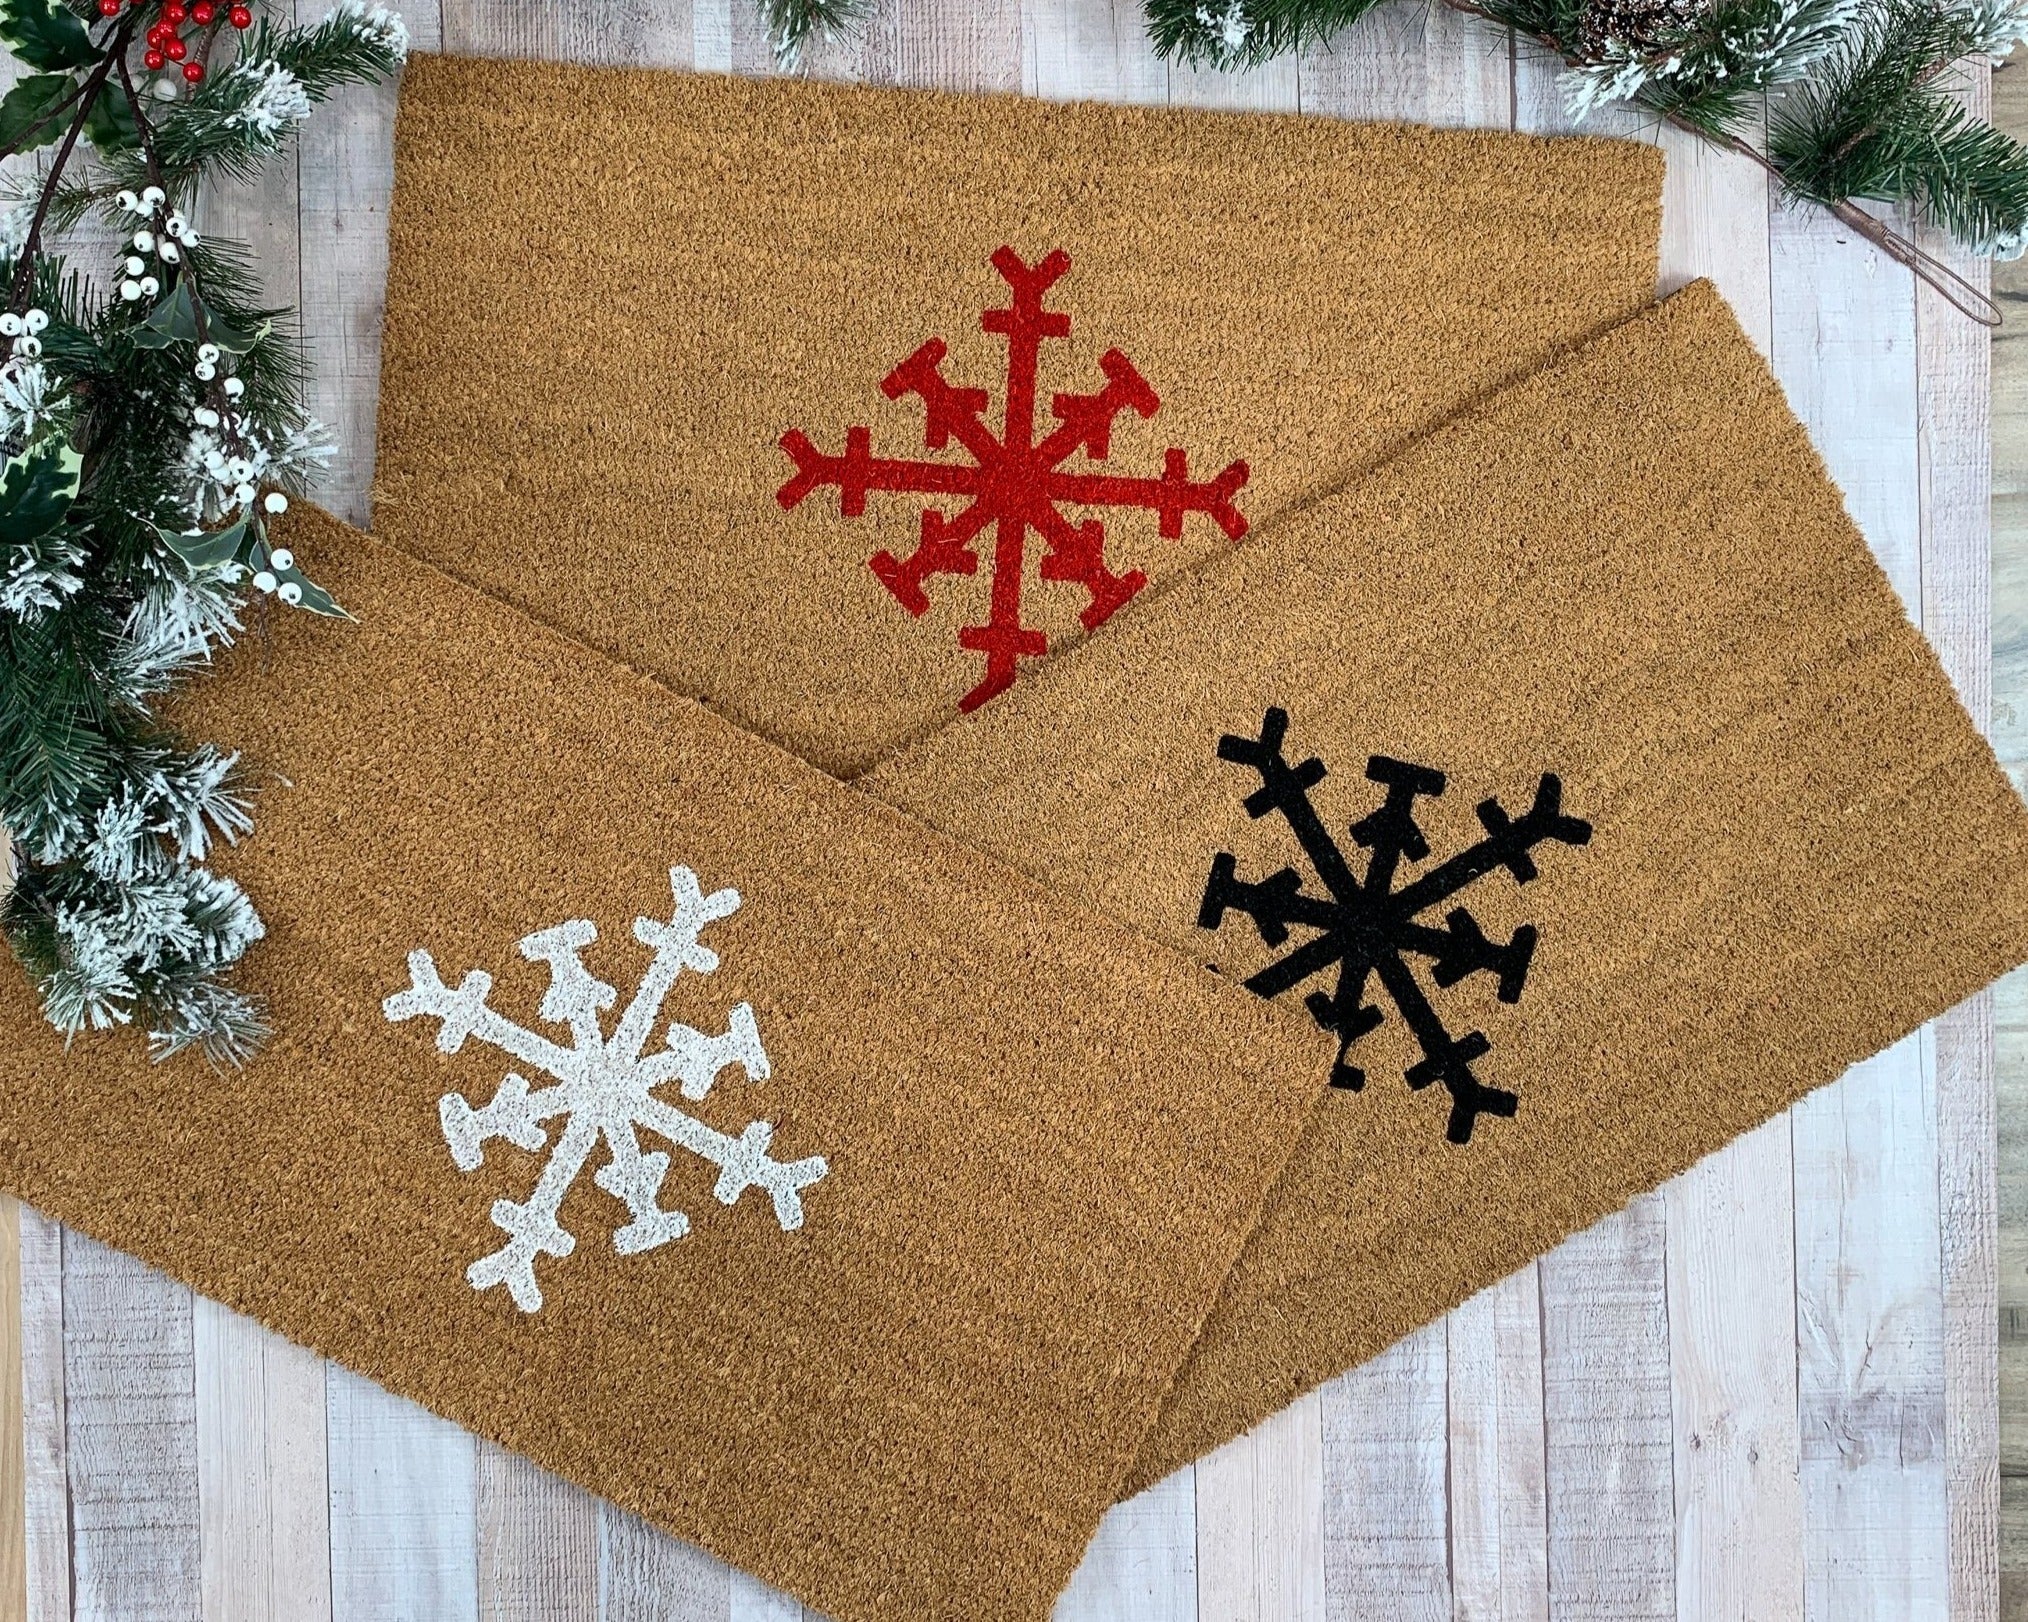 Christmas Decorative Doormat Let It Snow Winter Snowflake Non